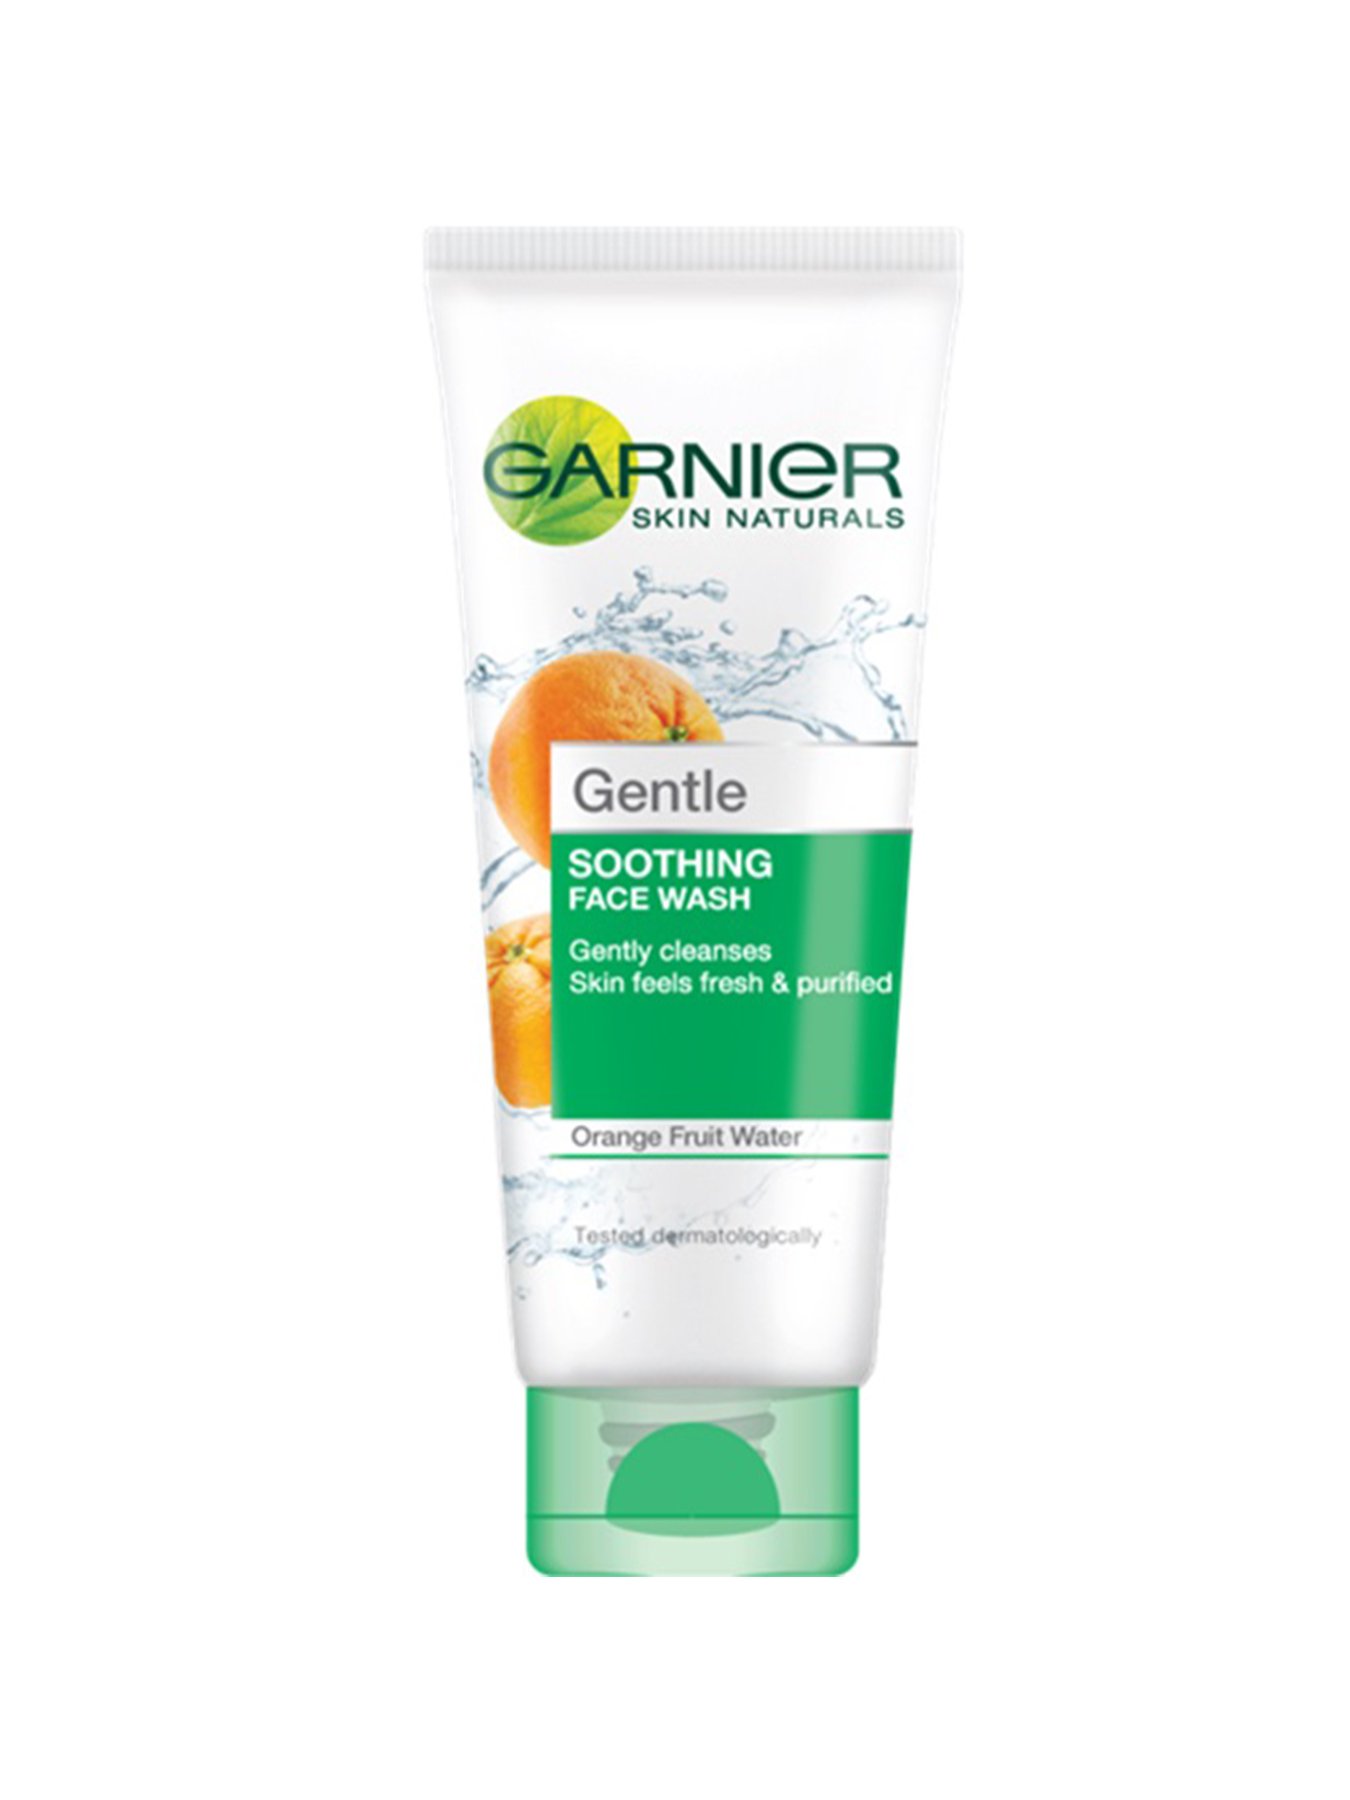 Garnier Gentle Soothing Face Wash